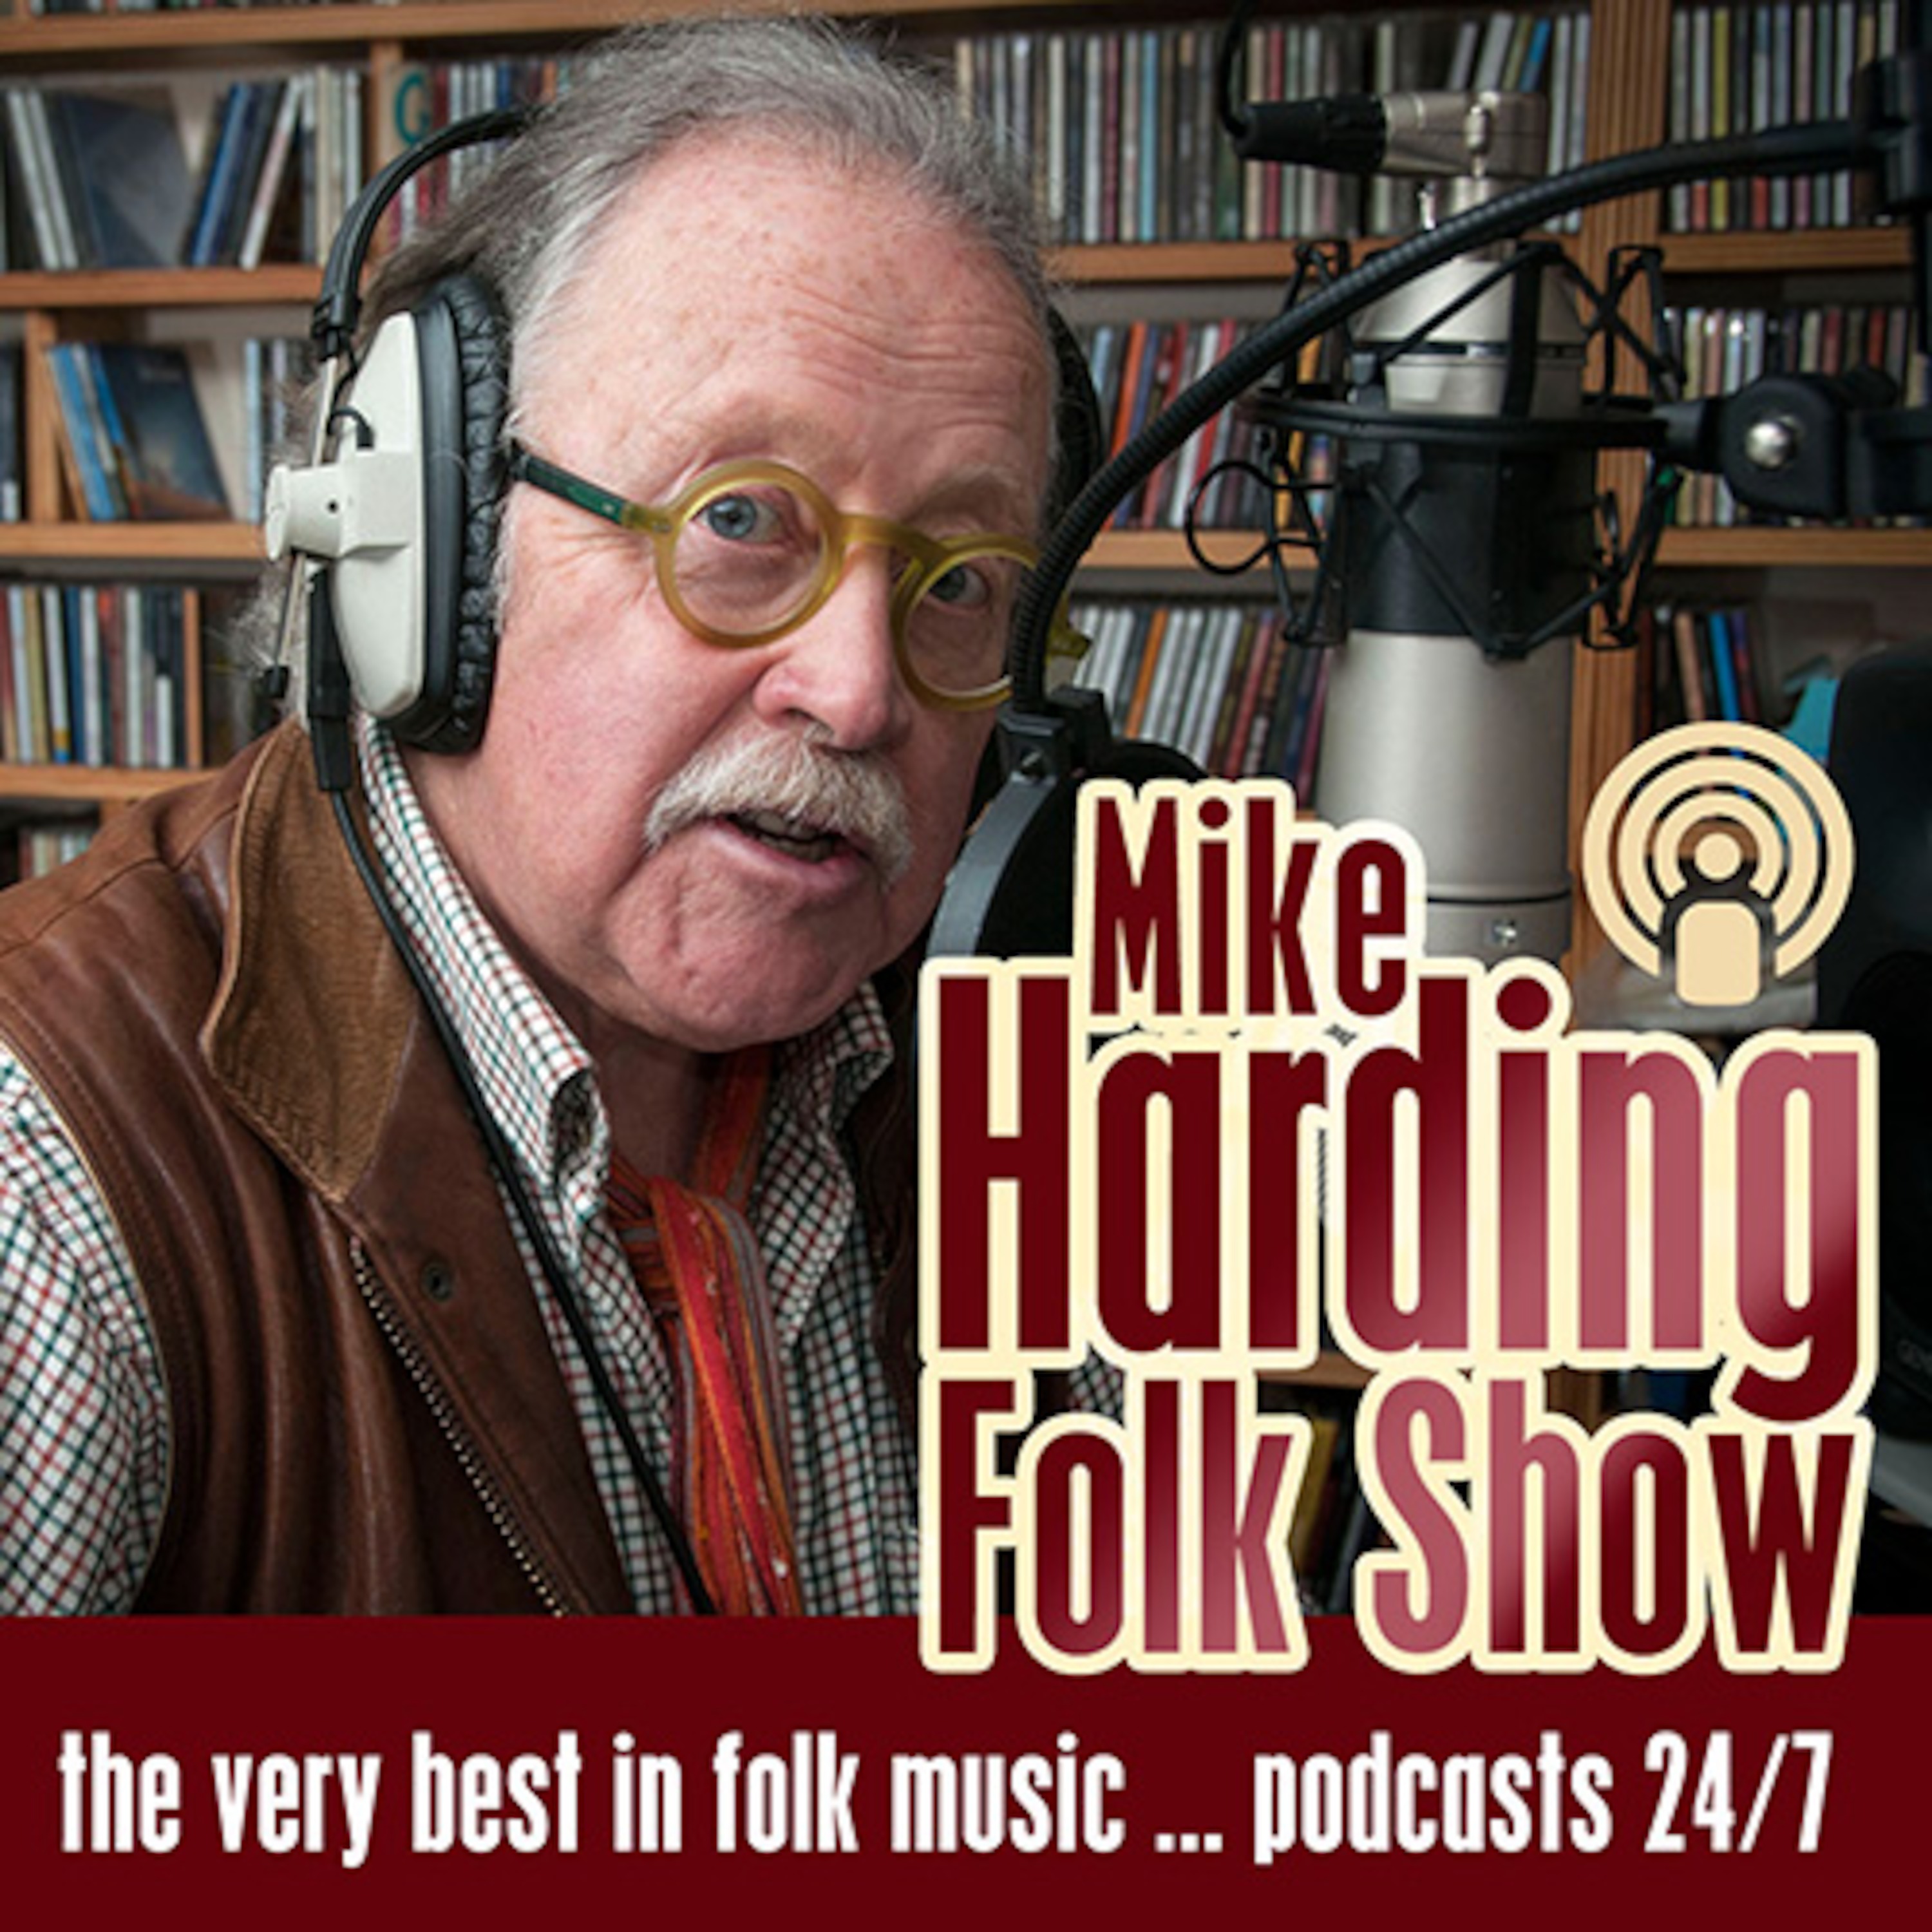 Mike Harding Folk Show 96